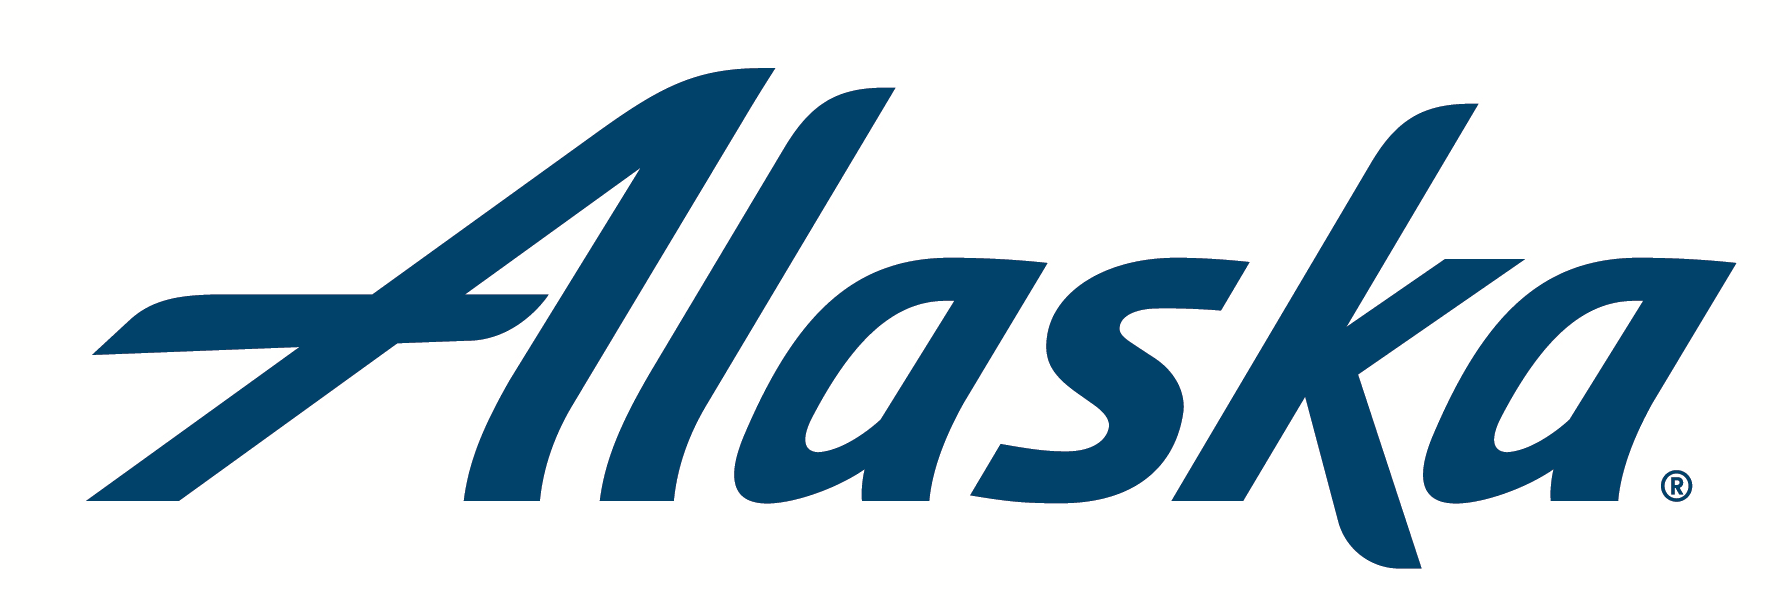 Alaska Airlines – Logos Download